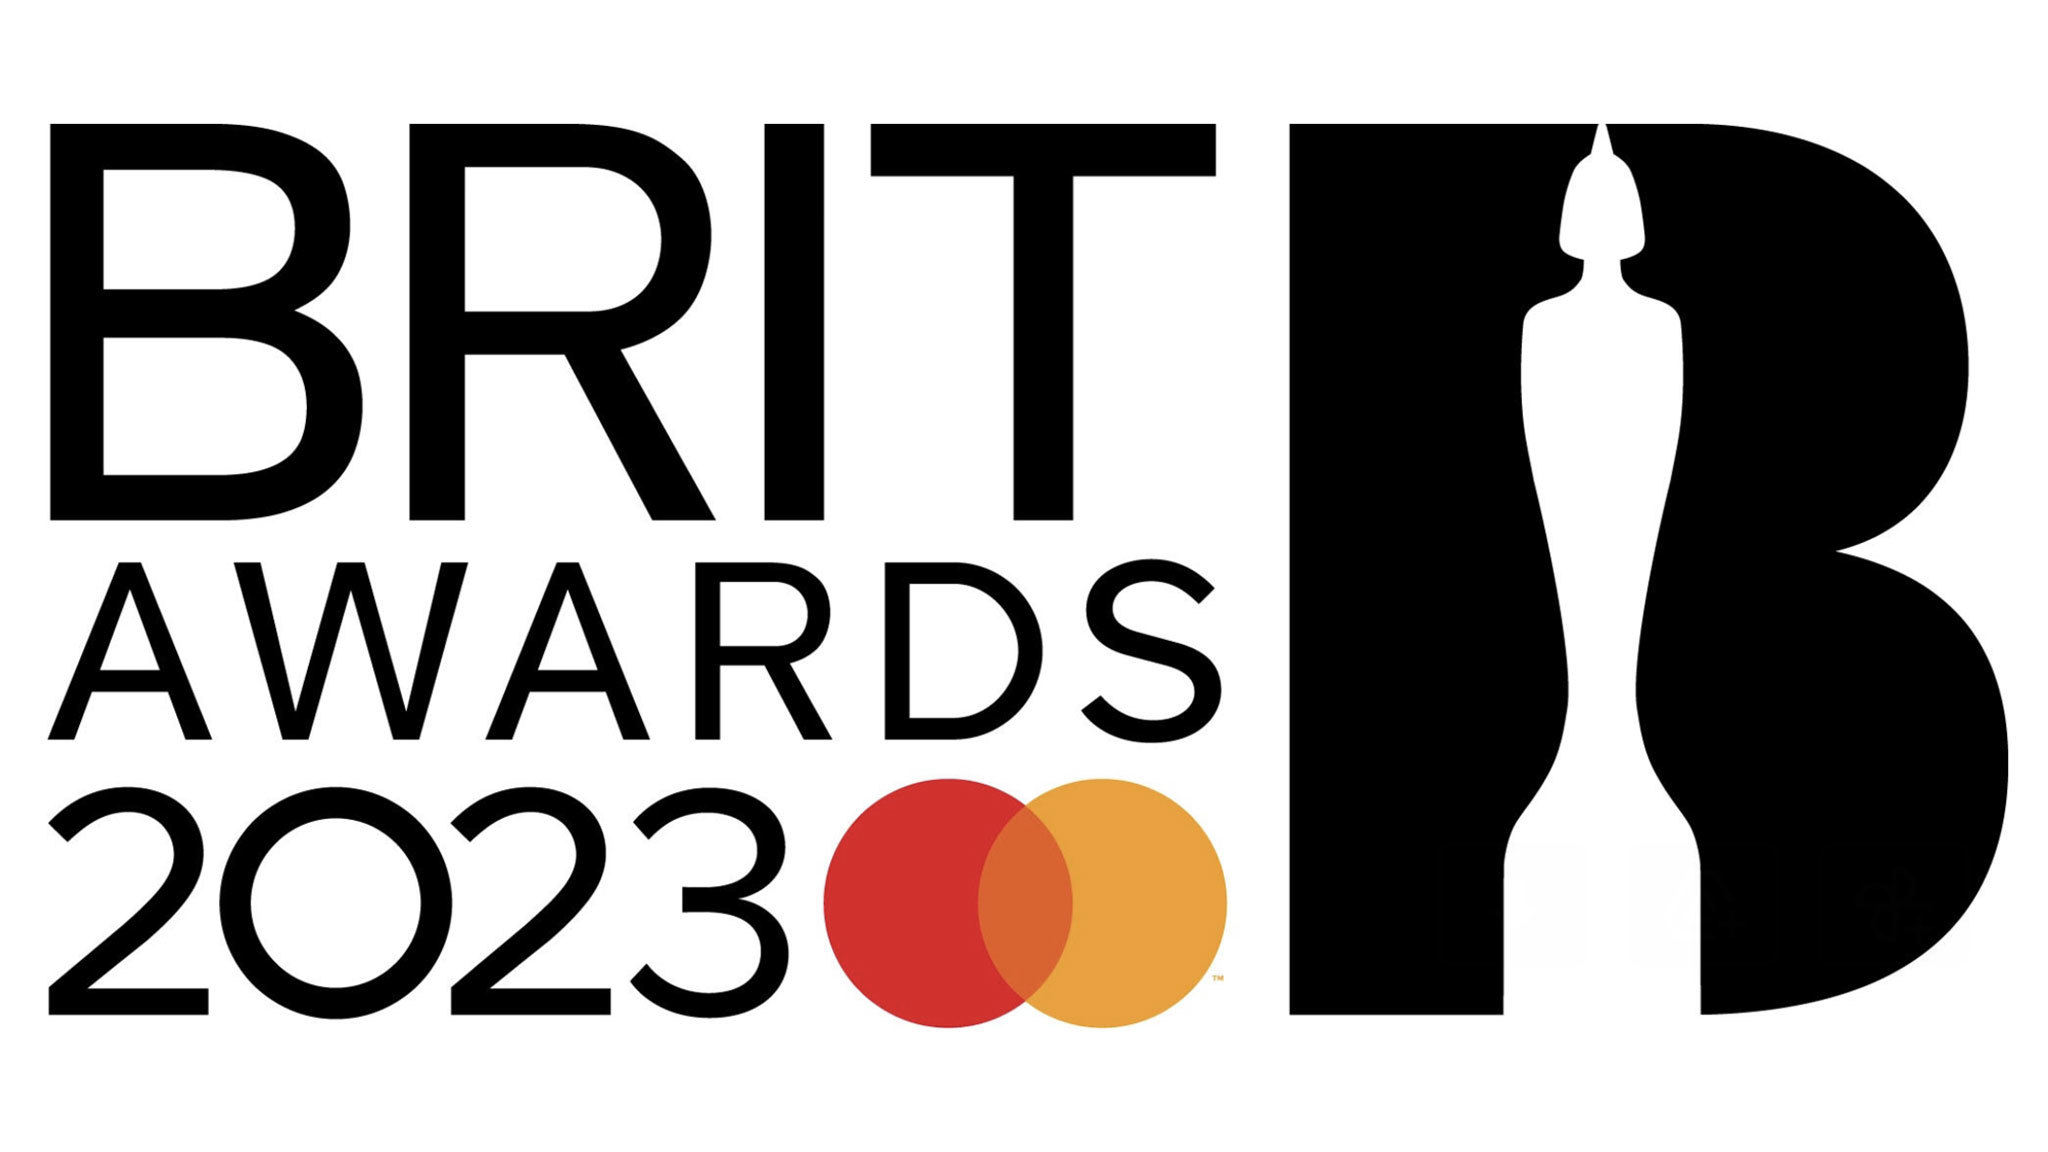 BRIT Awards 2023 date announced